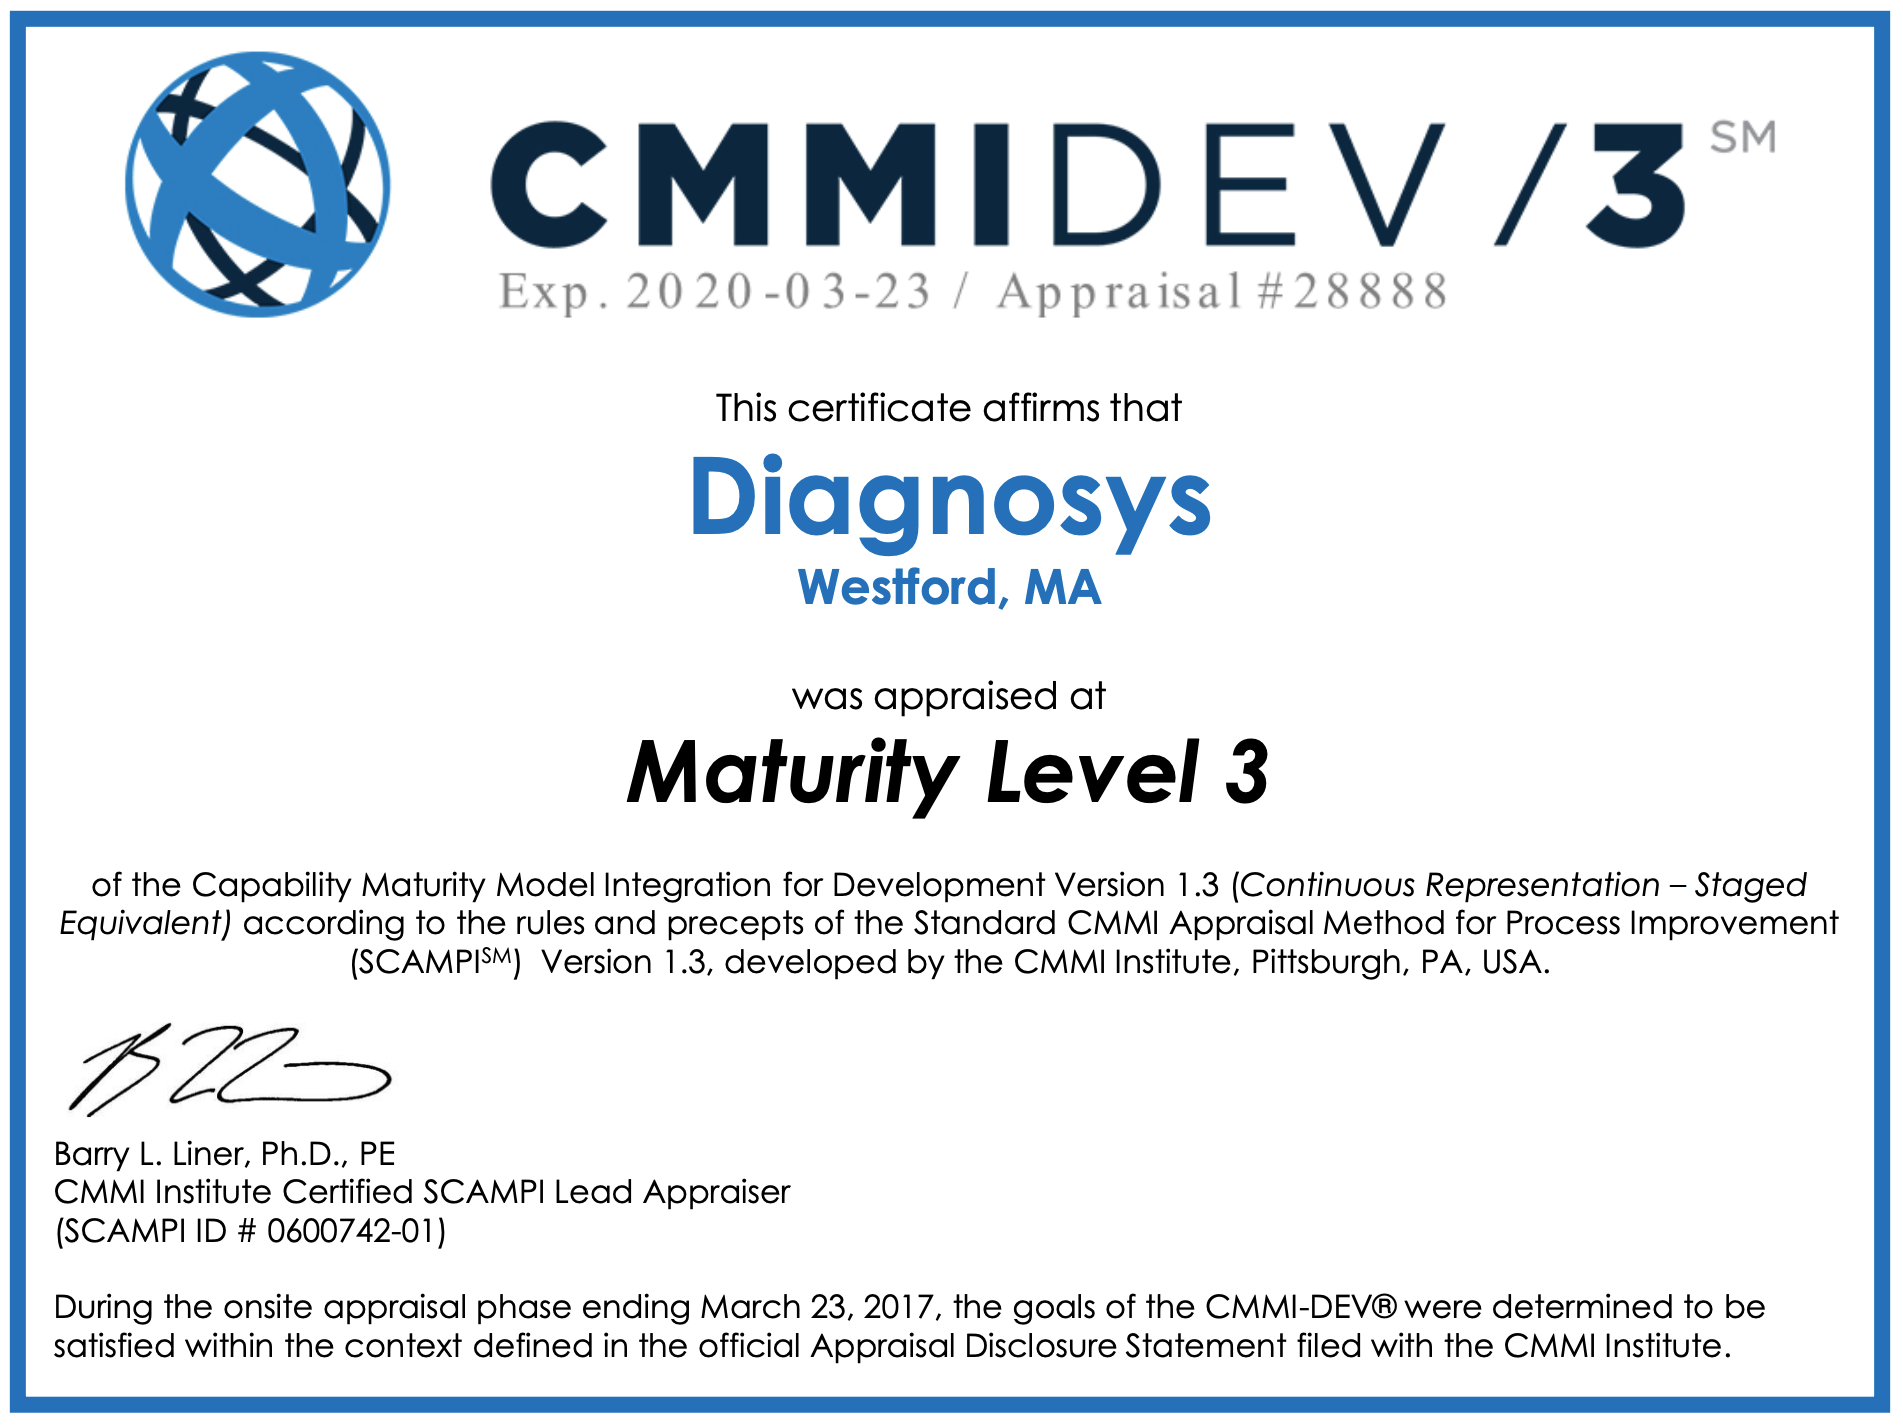 CMMI Institute. Cisi Level 3 Certificate. What is Original maturity Certificate.